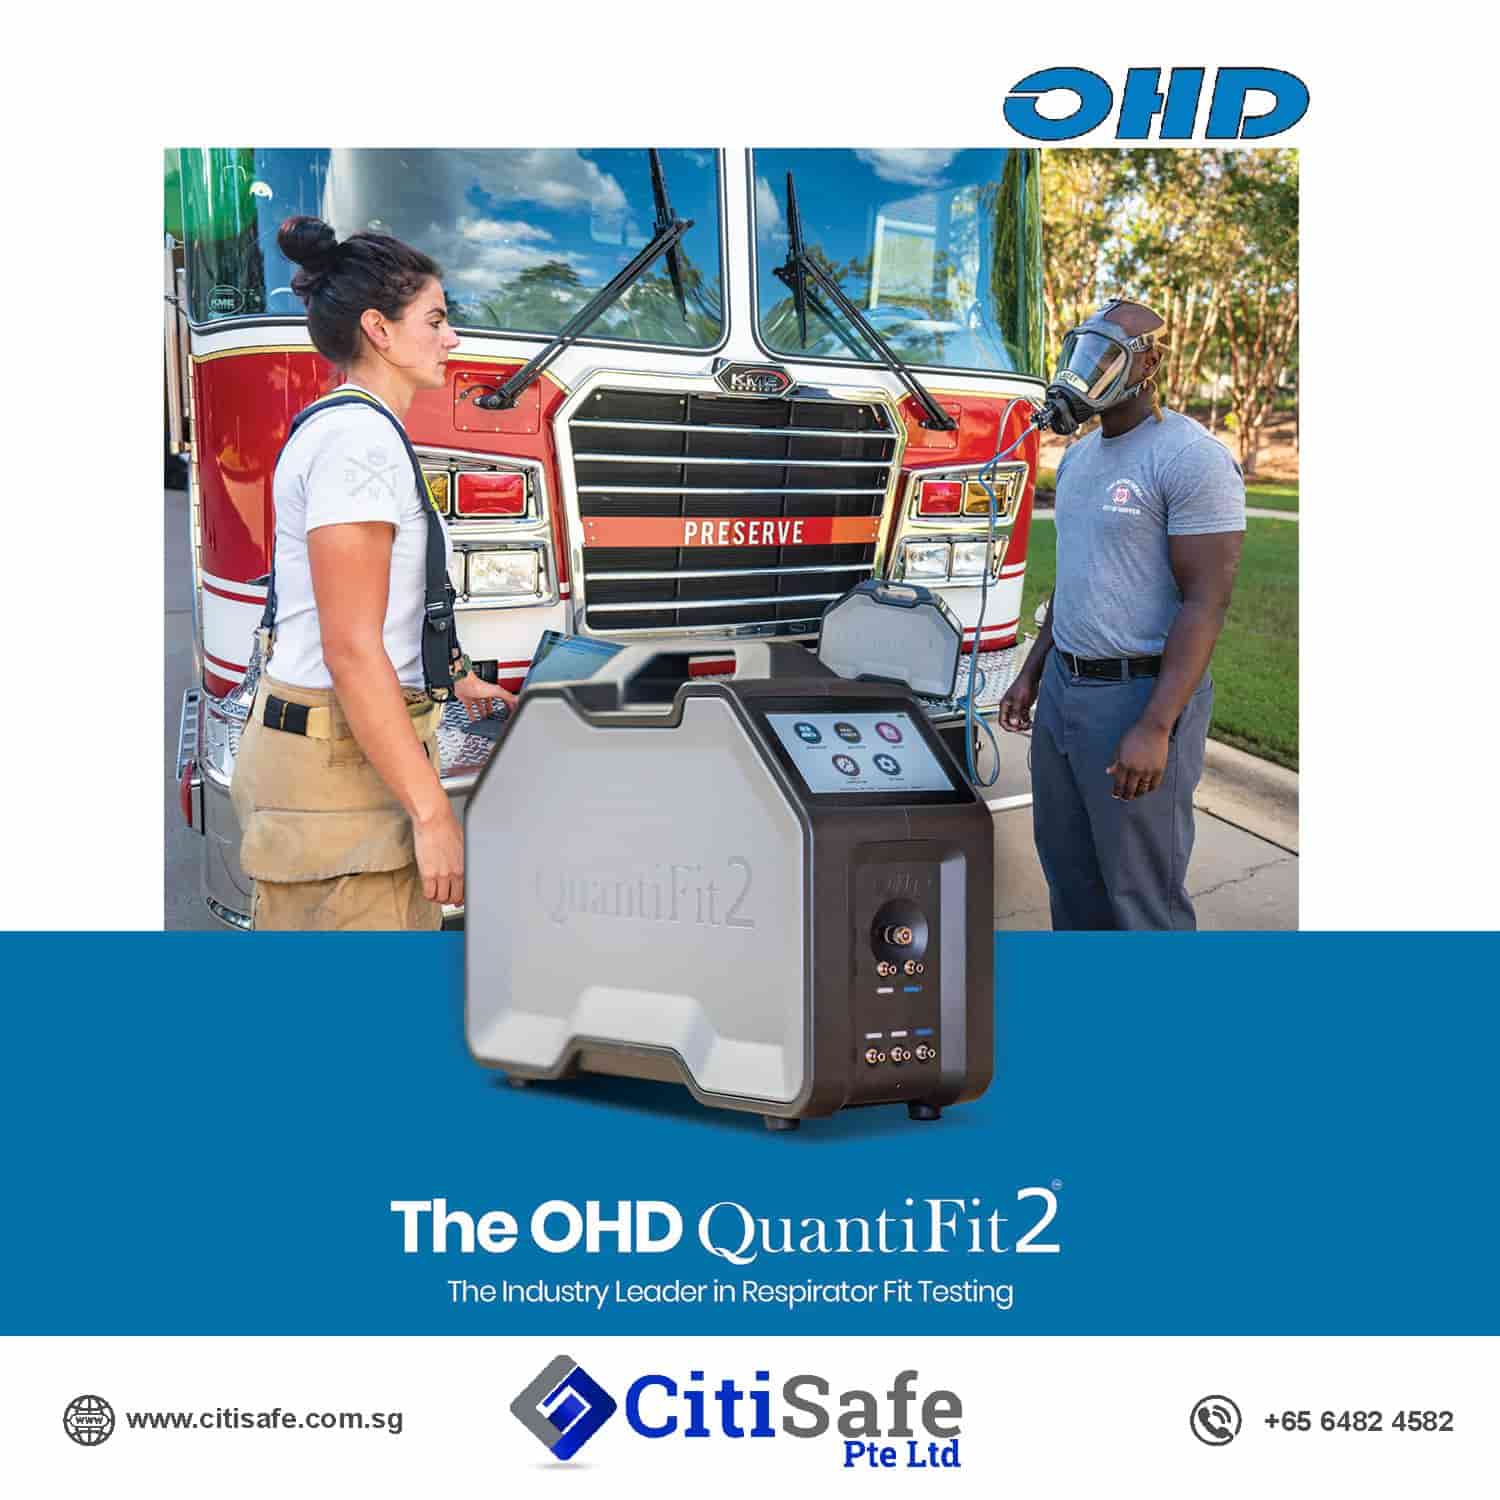 OHD QuantiFit2 Respirator Fit Tester